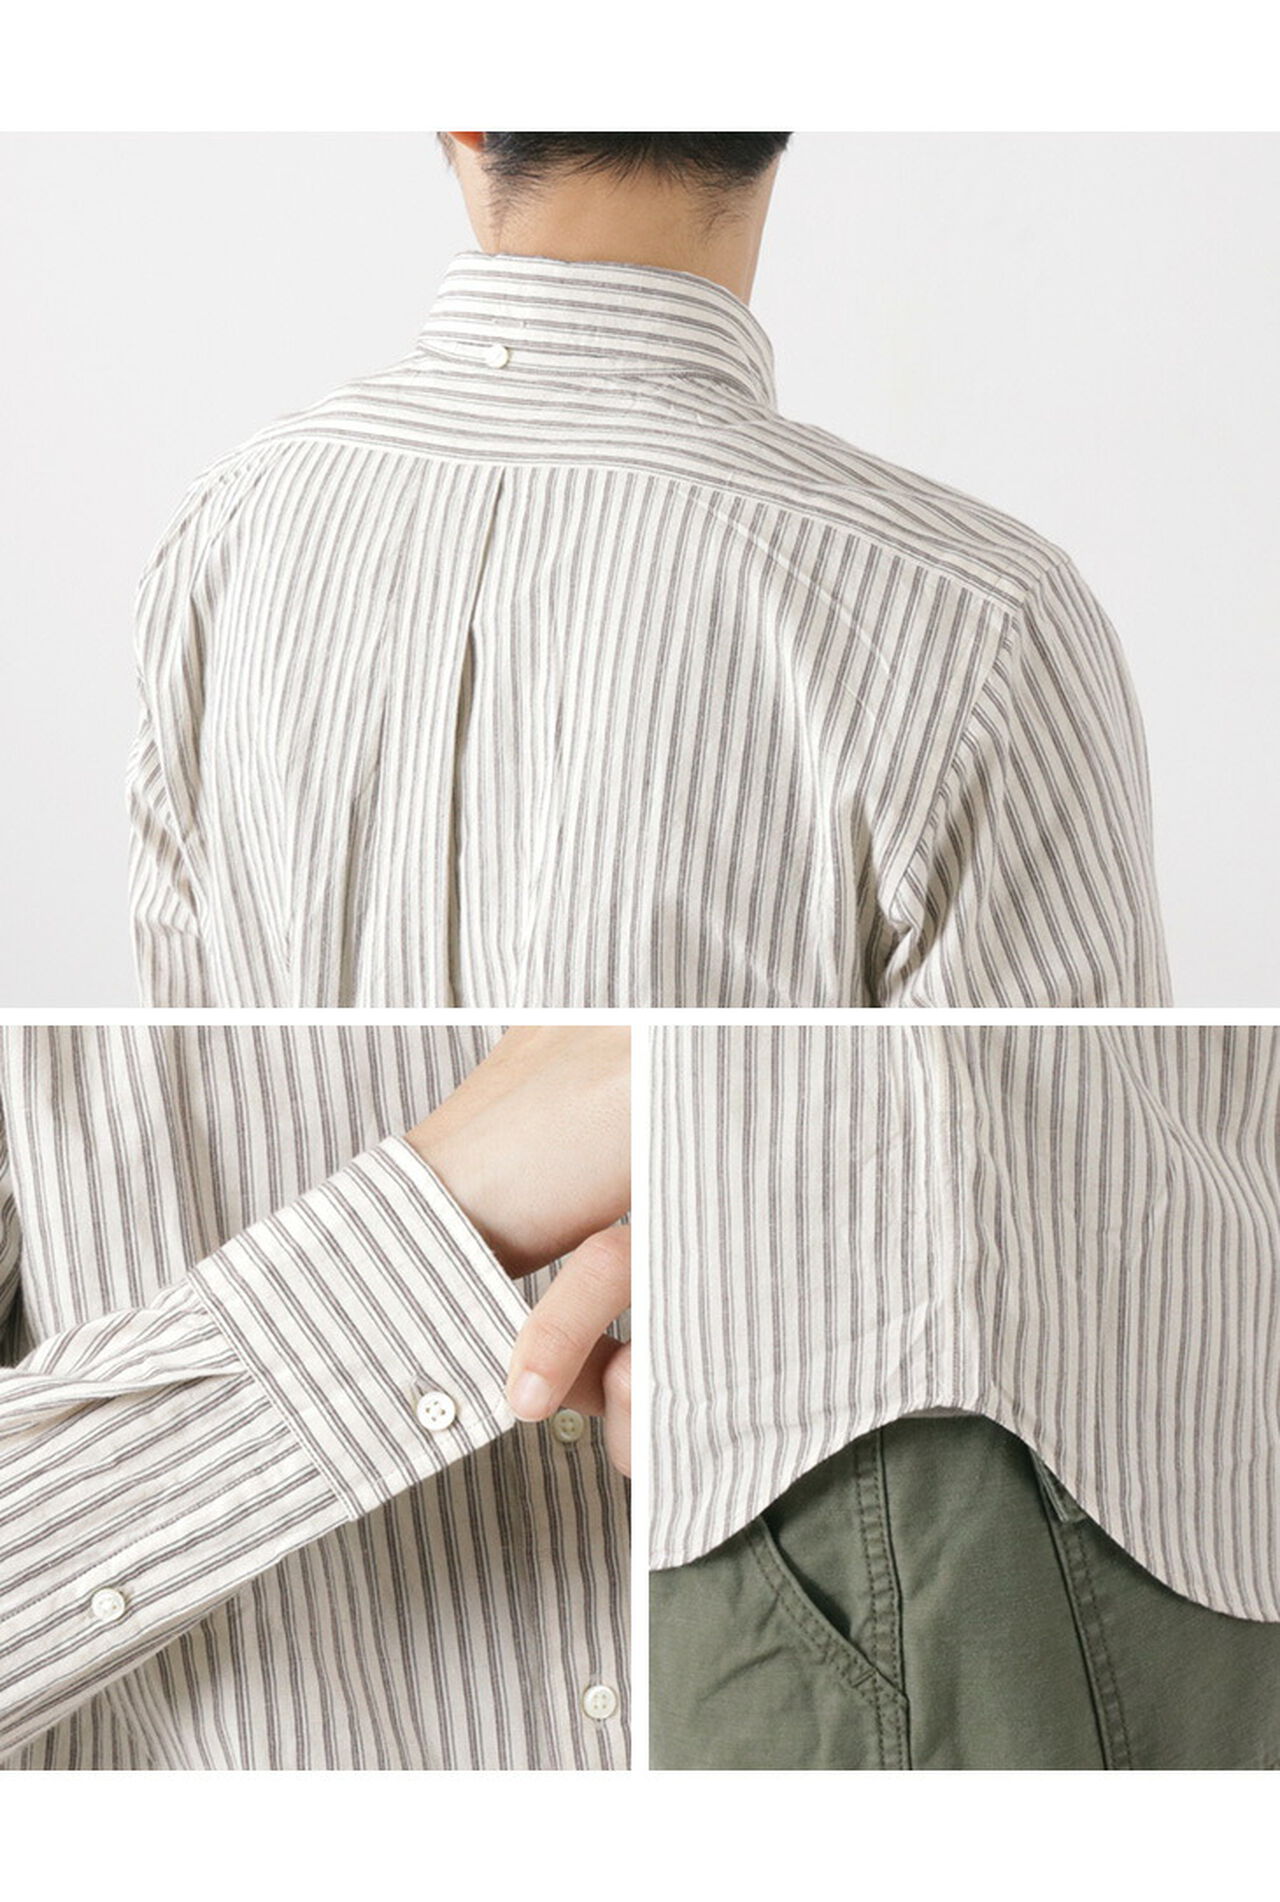 Cotton Linen Stripe Button Down Shirt,, large image number 7